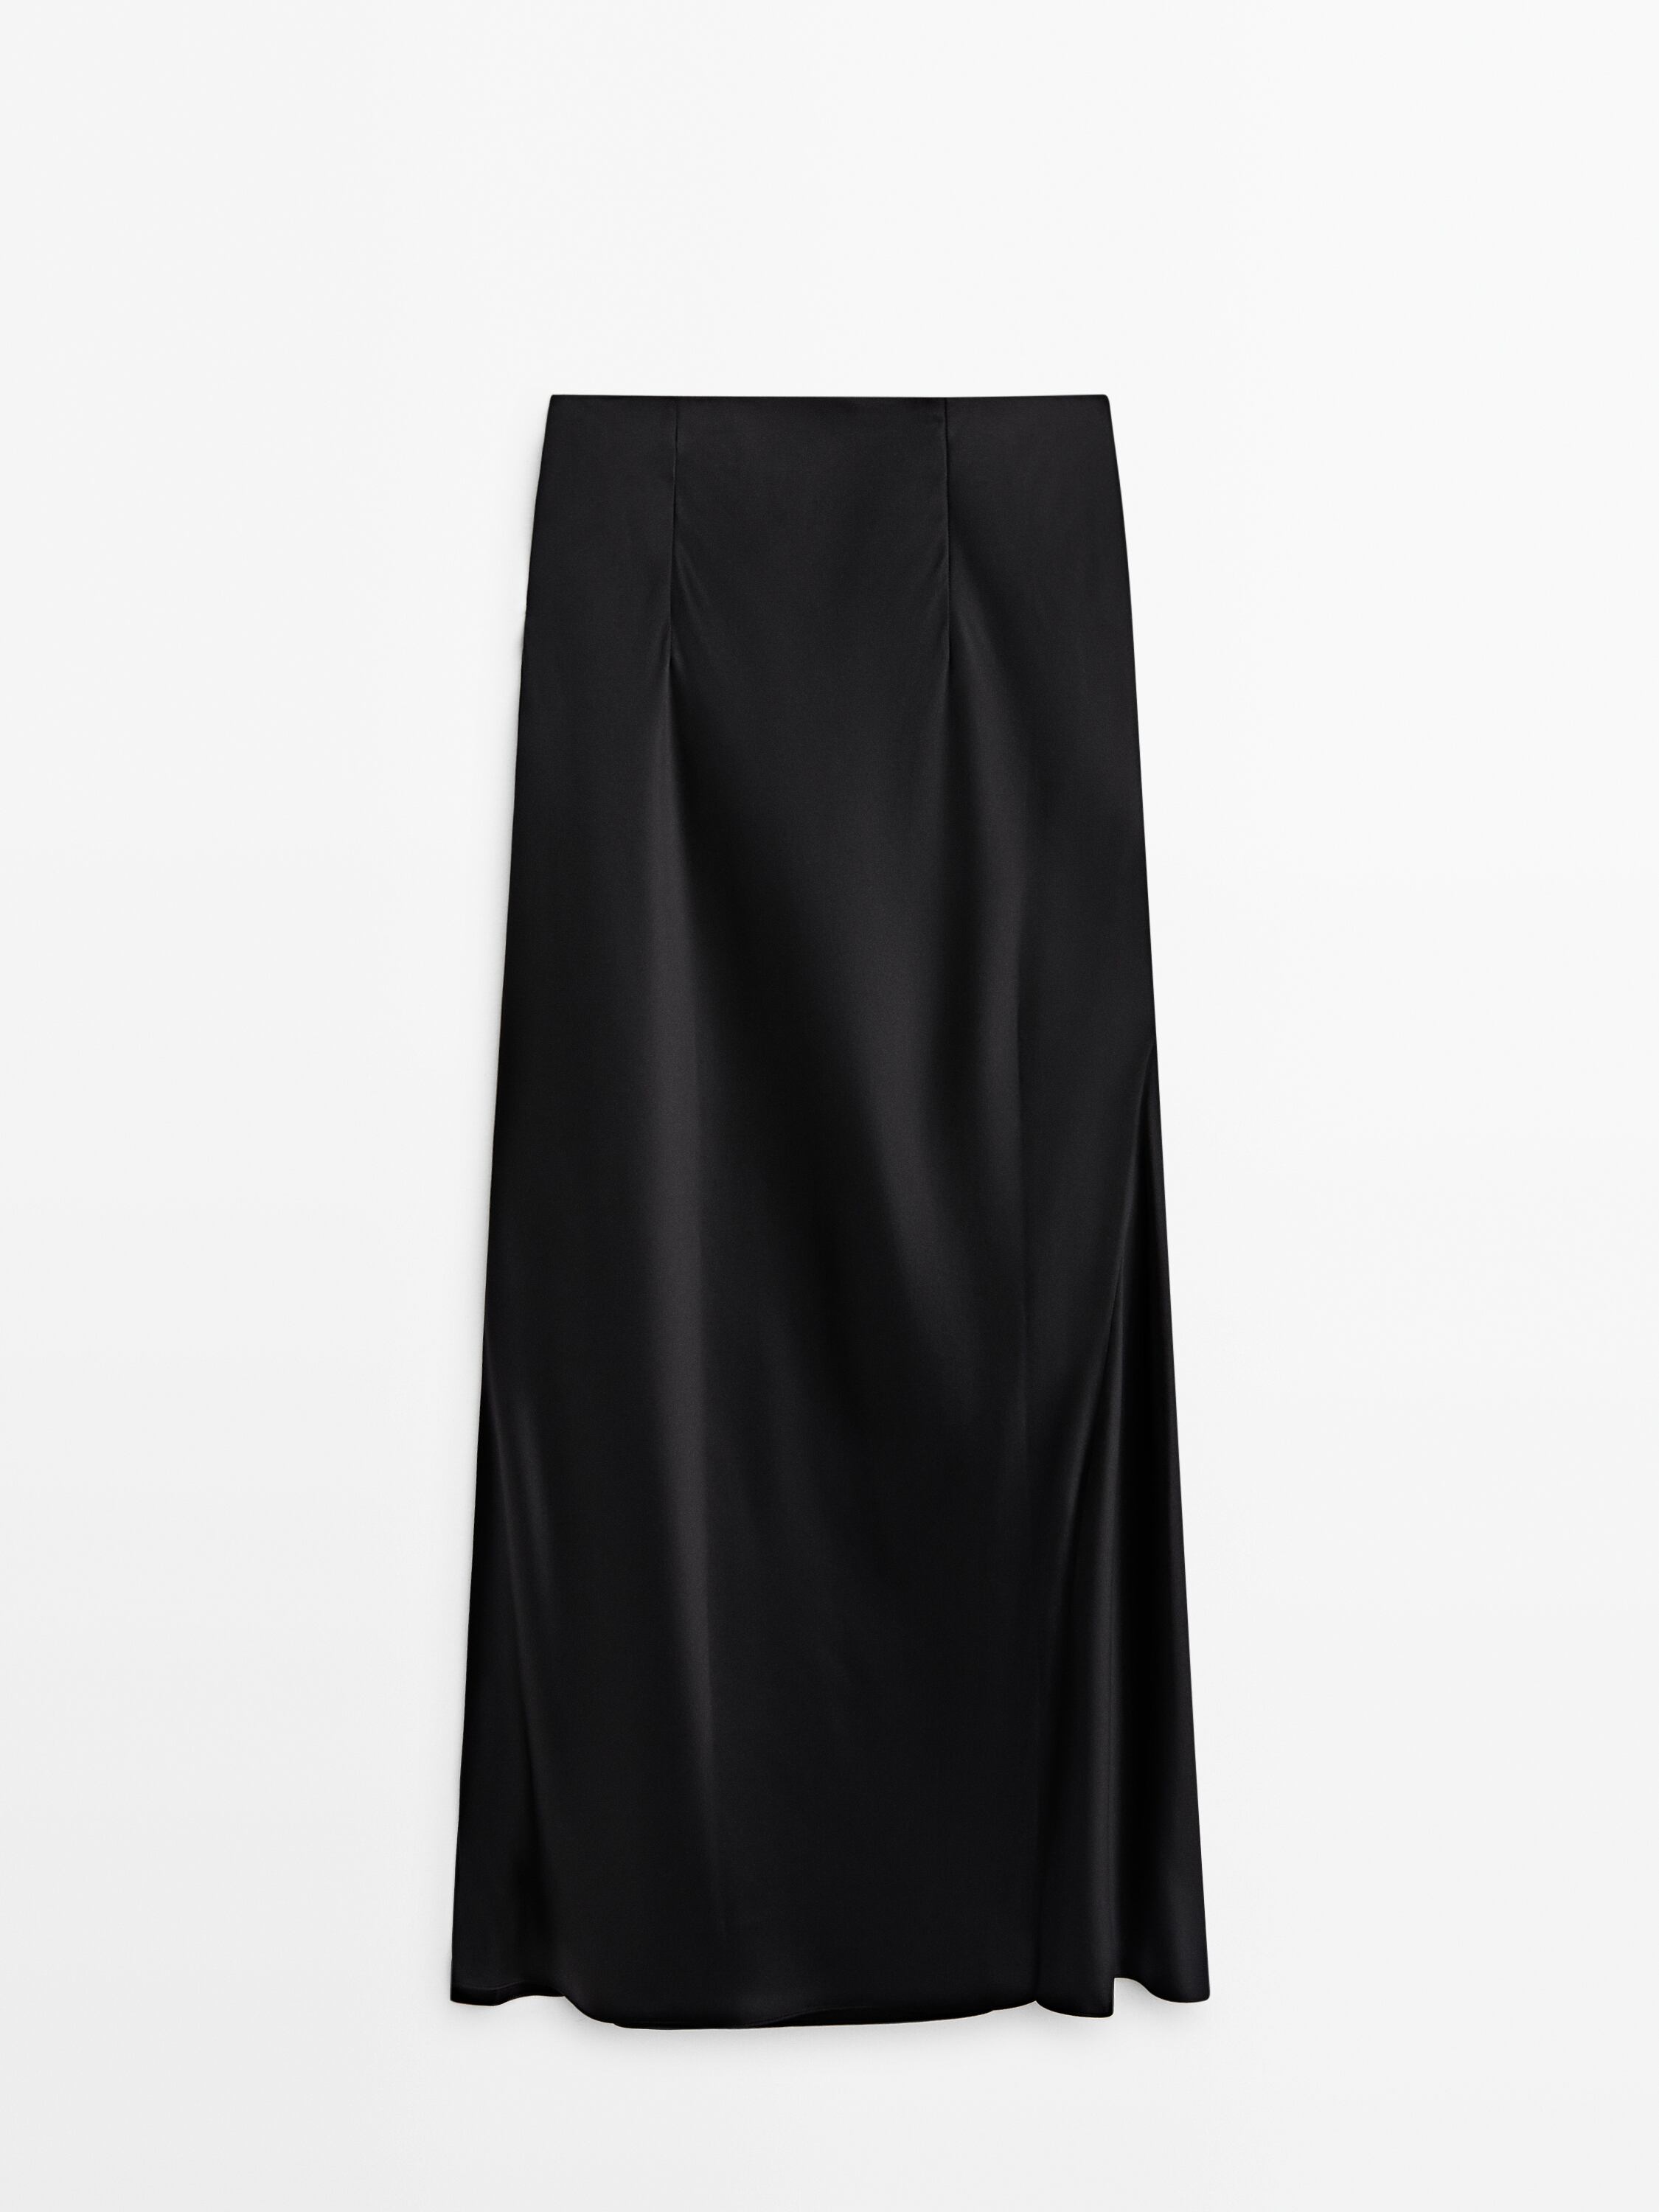 Zara Long satin skirt - Studio | Mall of America®